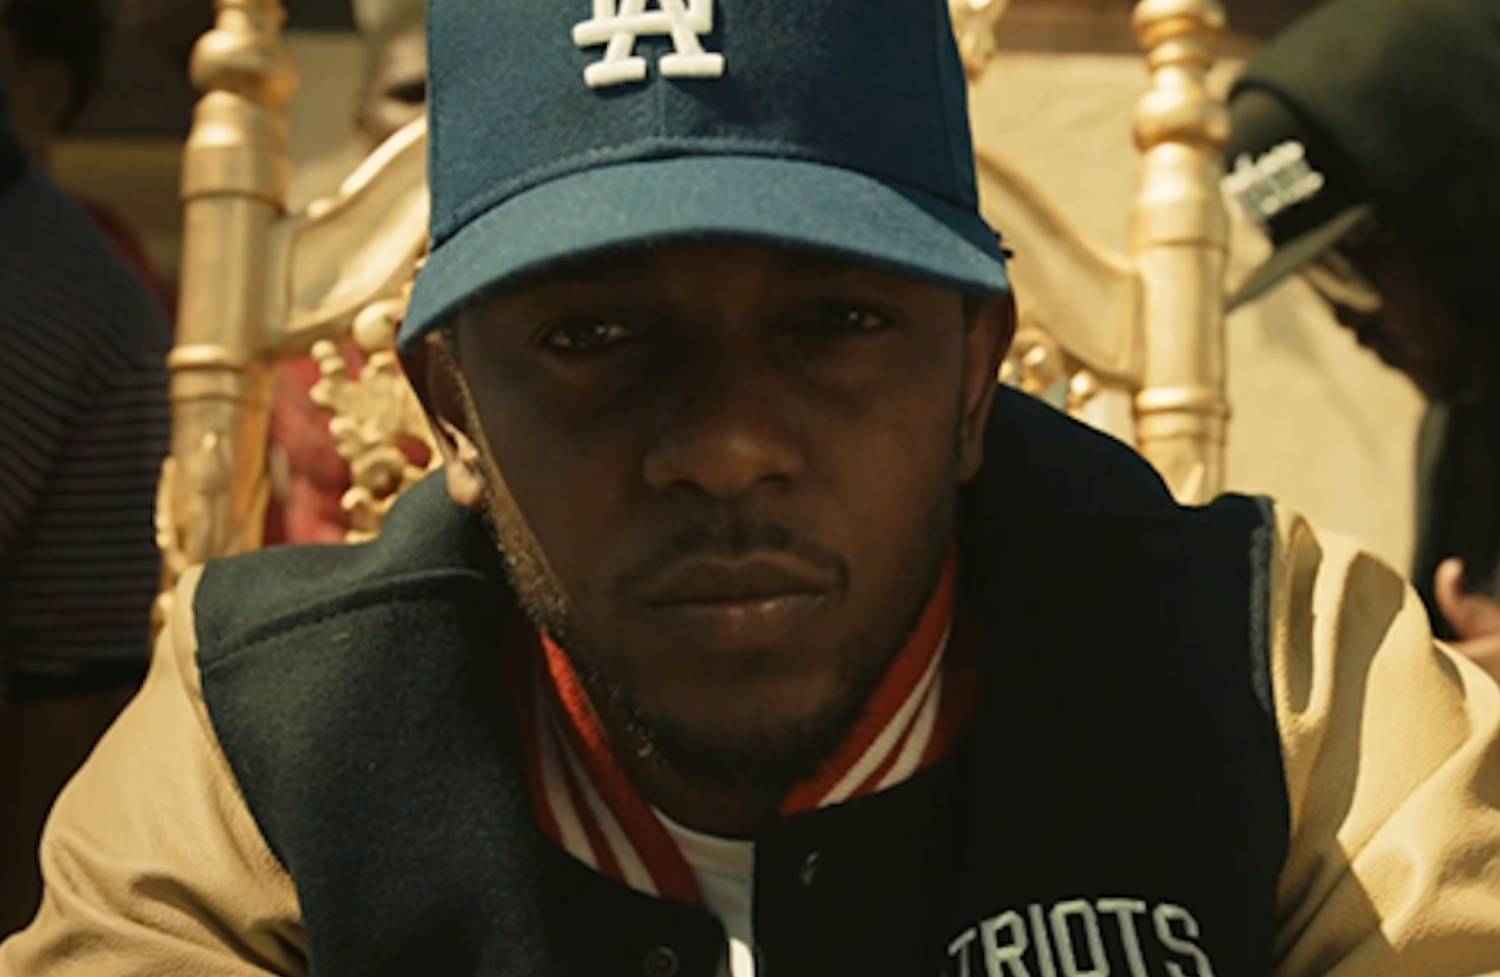 Kendrick Lamar Returns With The Heart Part 5 Deepfake Video